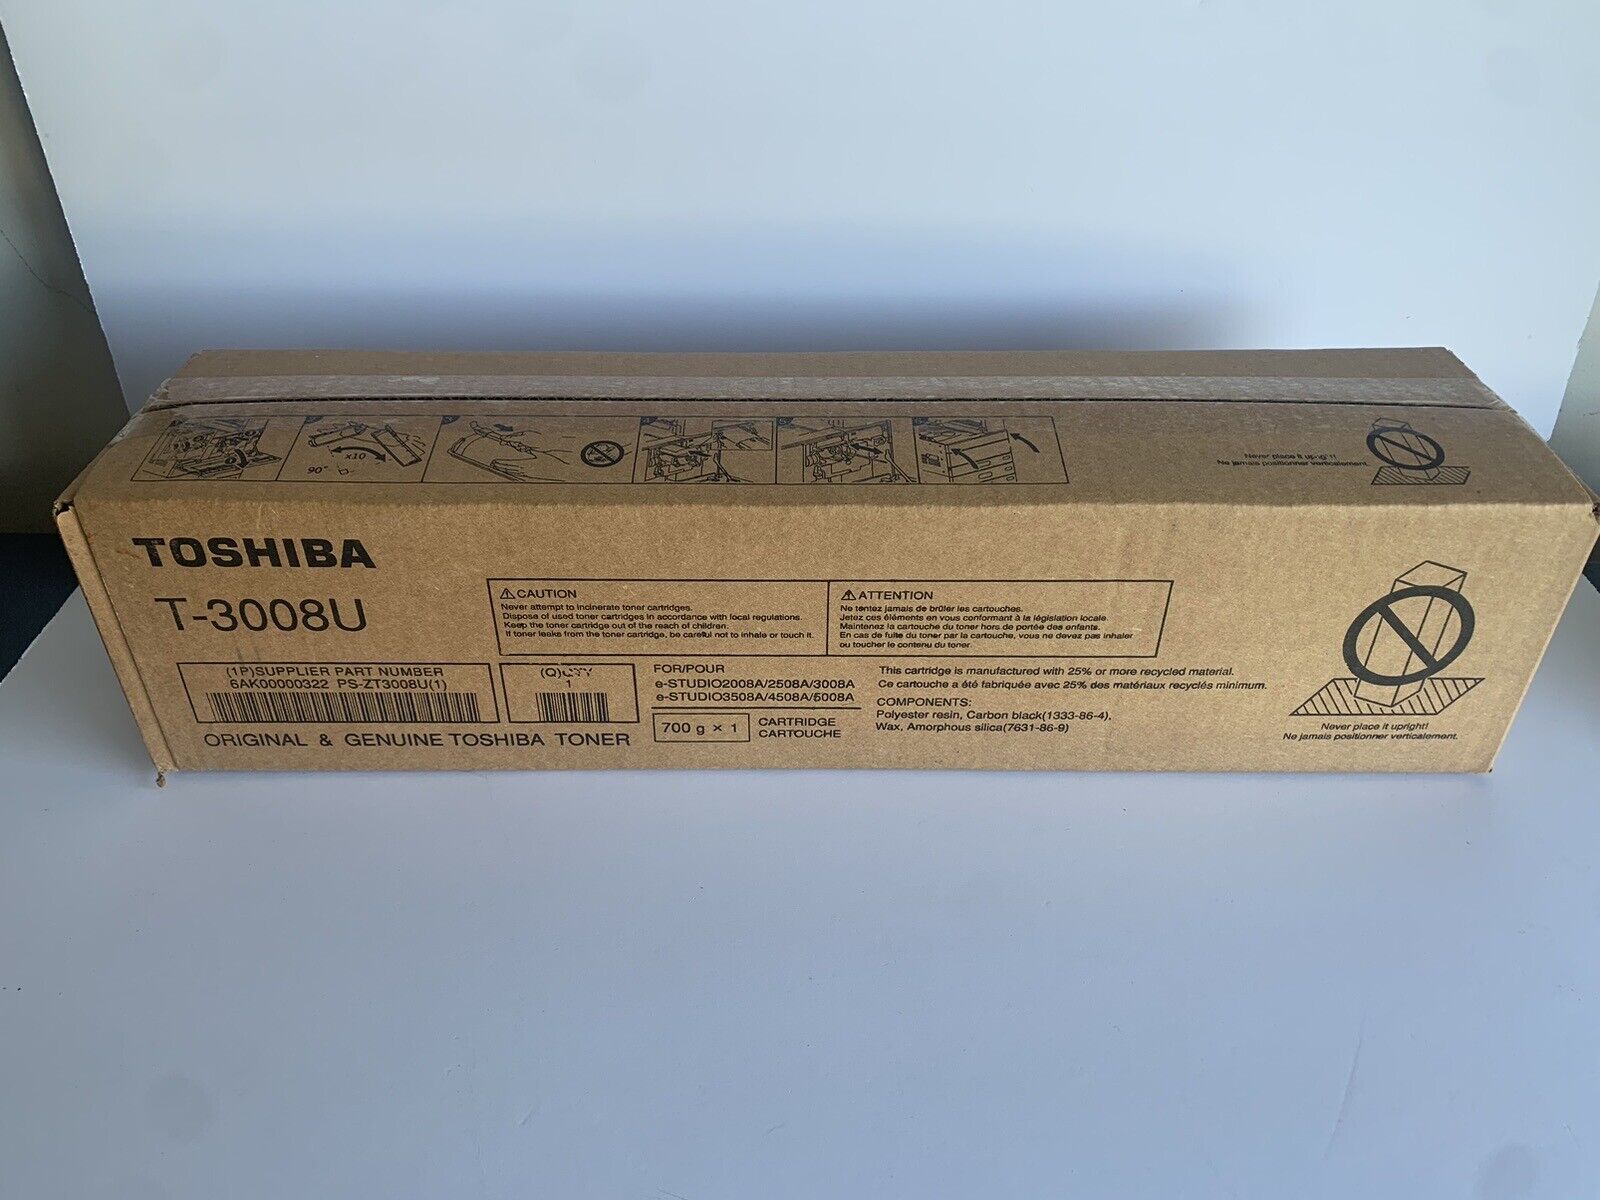 Genuine Toshiba T-3008U Black Toner Cartridge for 2008A/2508A/3008A NEW IN BOX